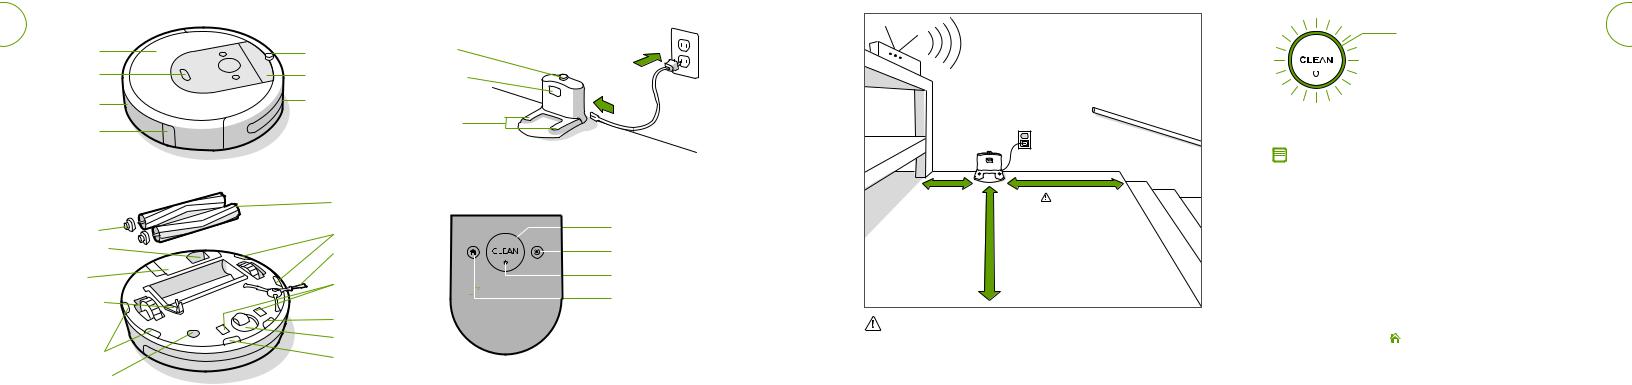 Irobot Roomba i7+ User Manual